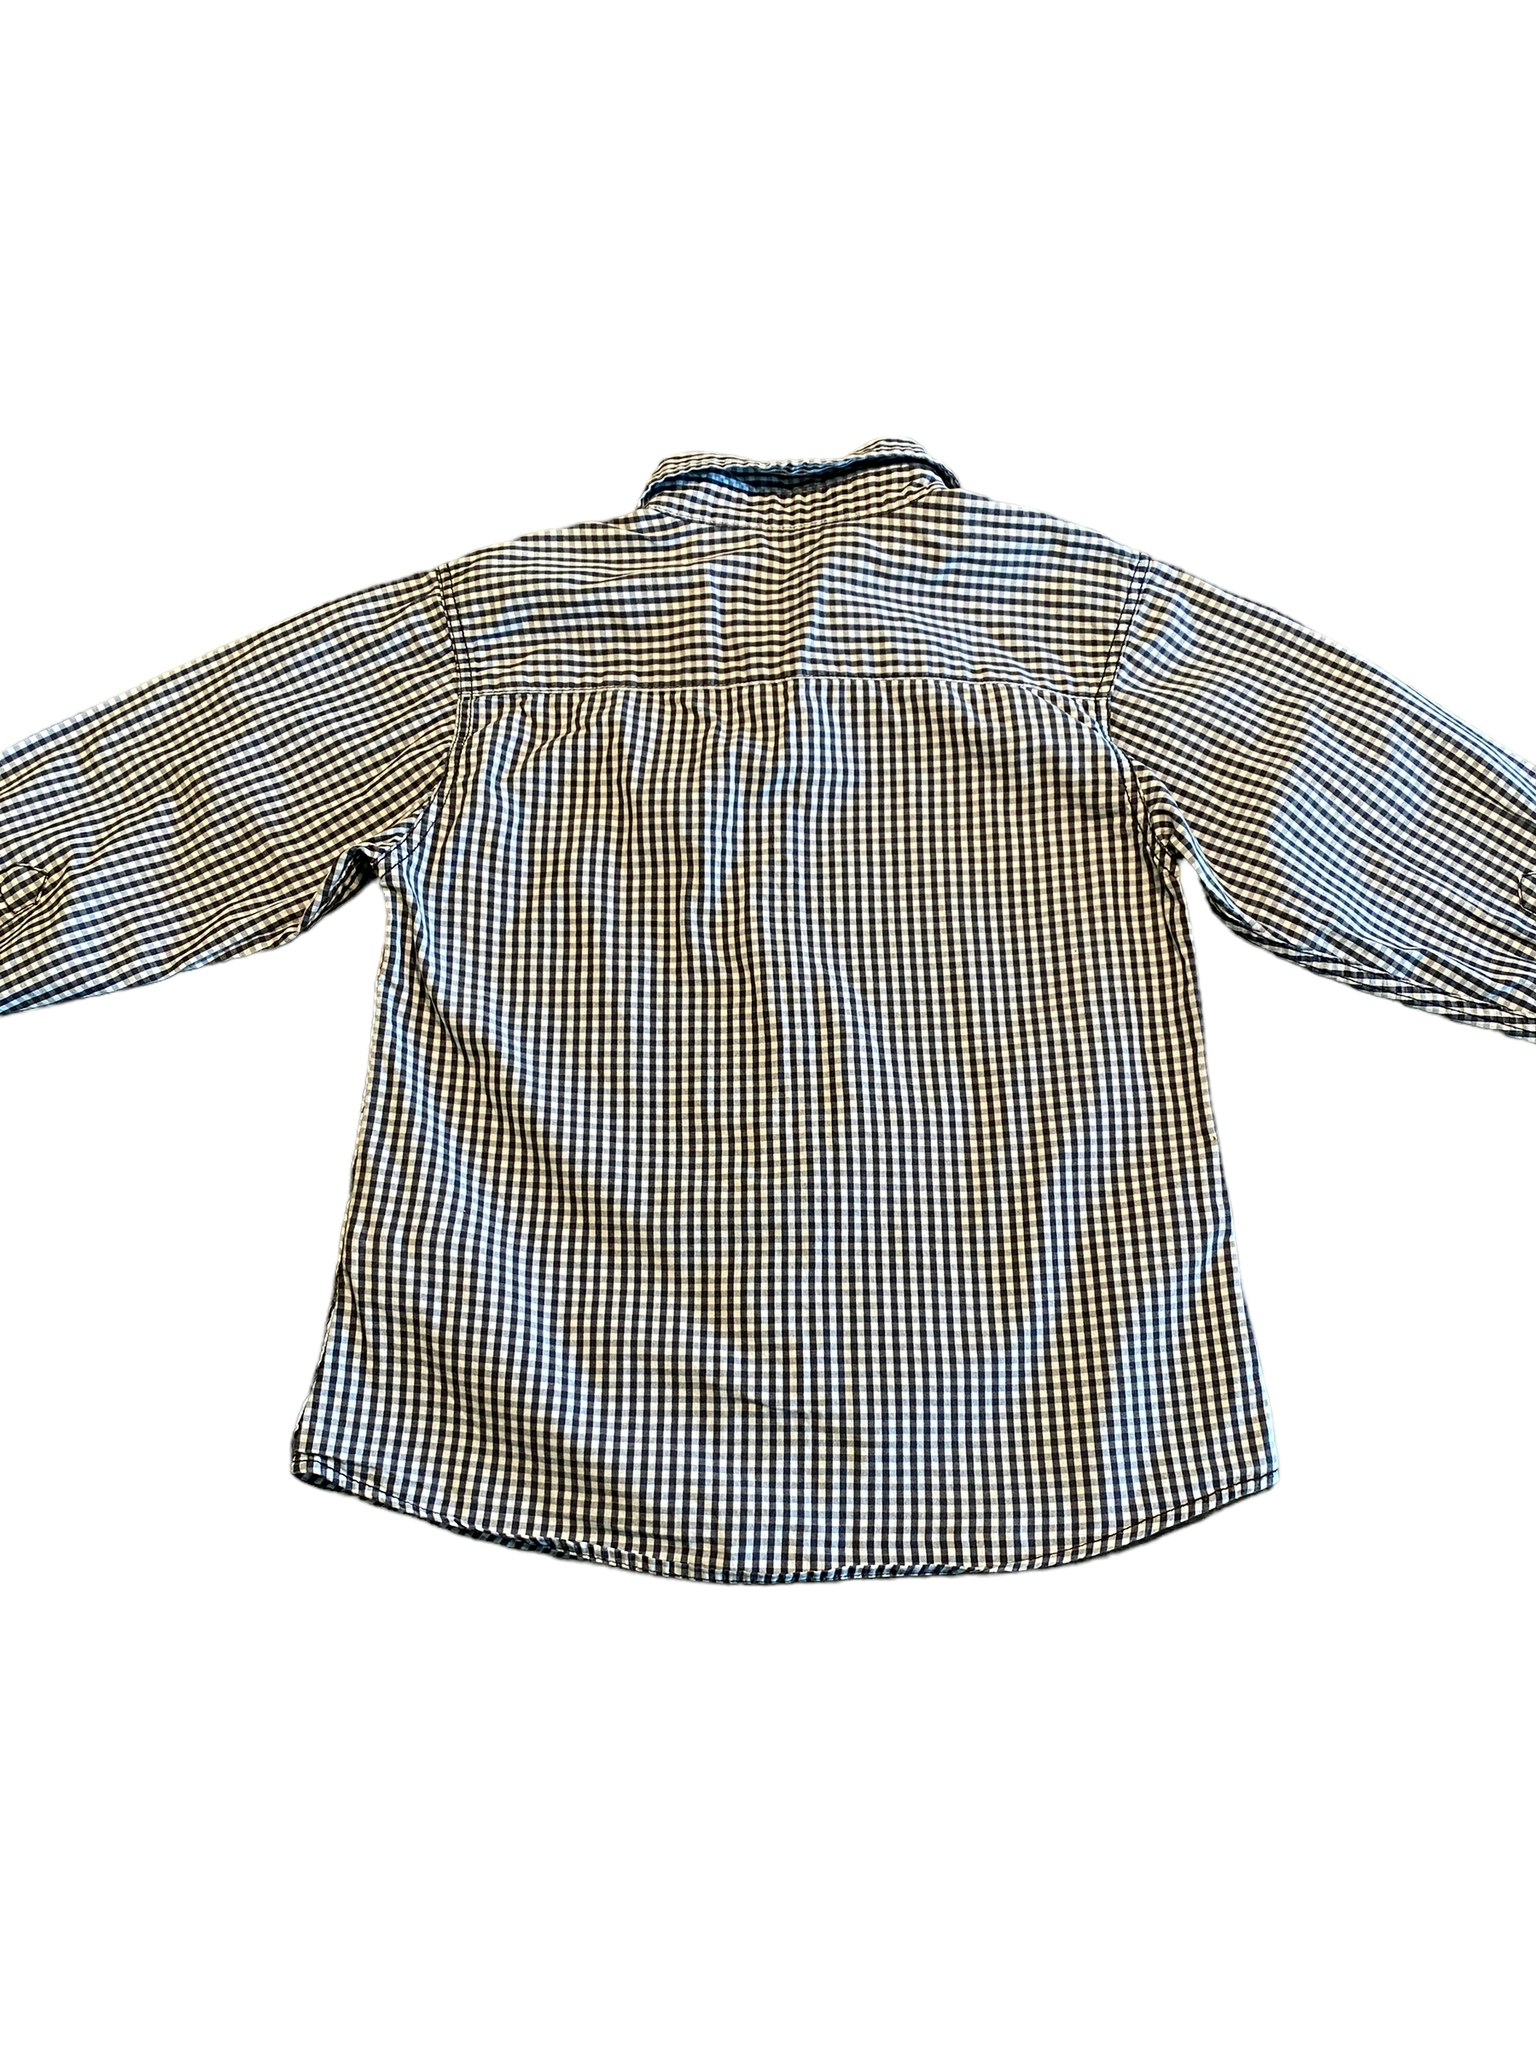 Rutig skjorta, Lindex, stl 104